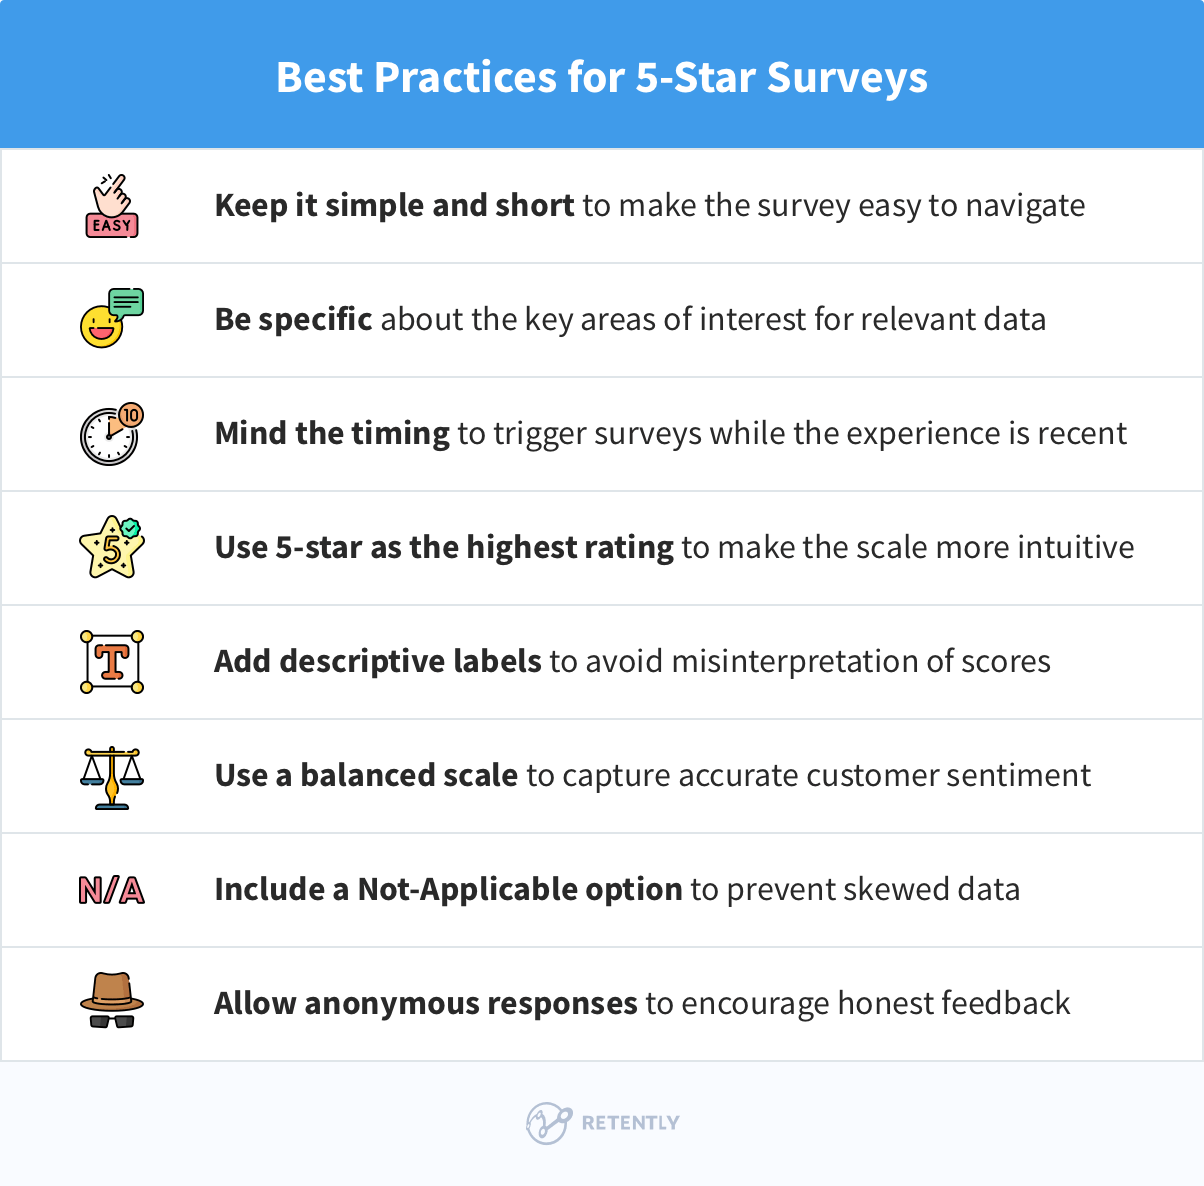 Best practices for 5-star surveys